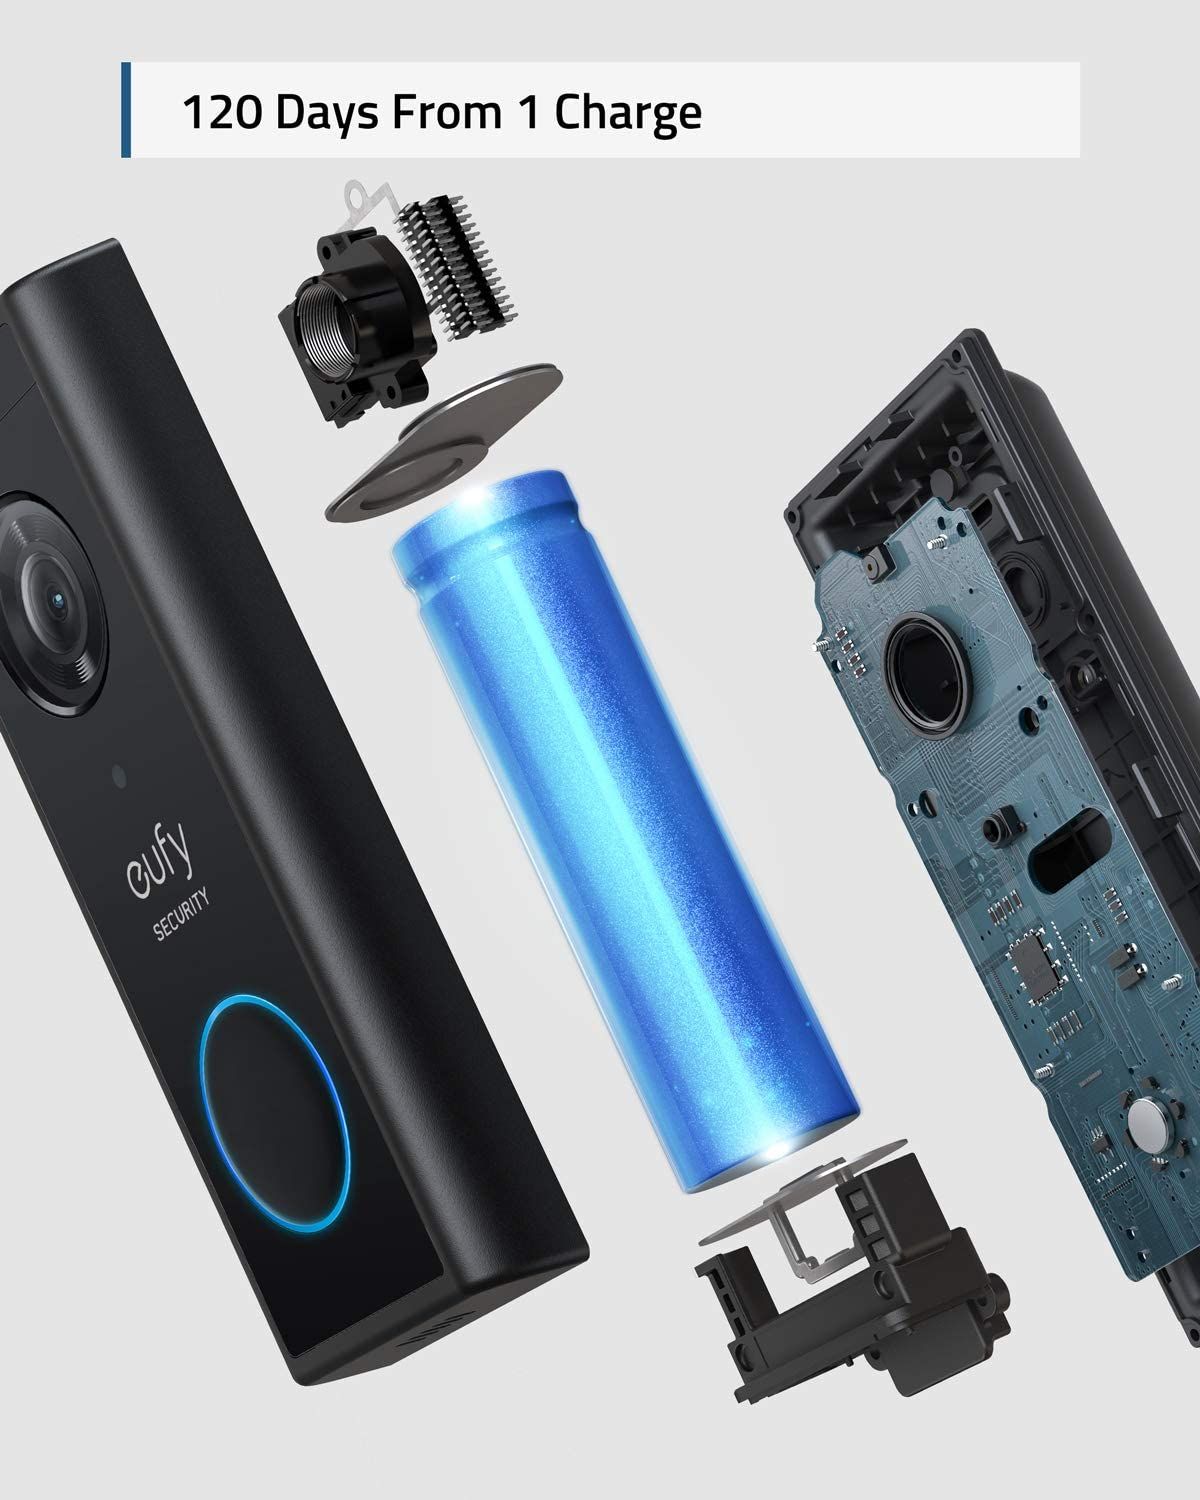 Eufy Video Doorbell's rechargeable battery